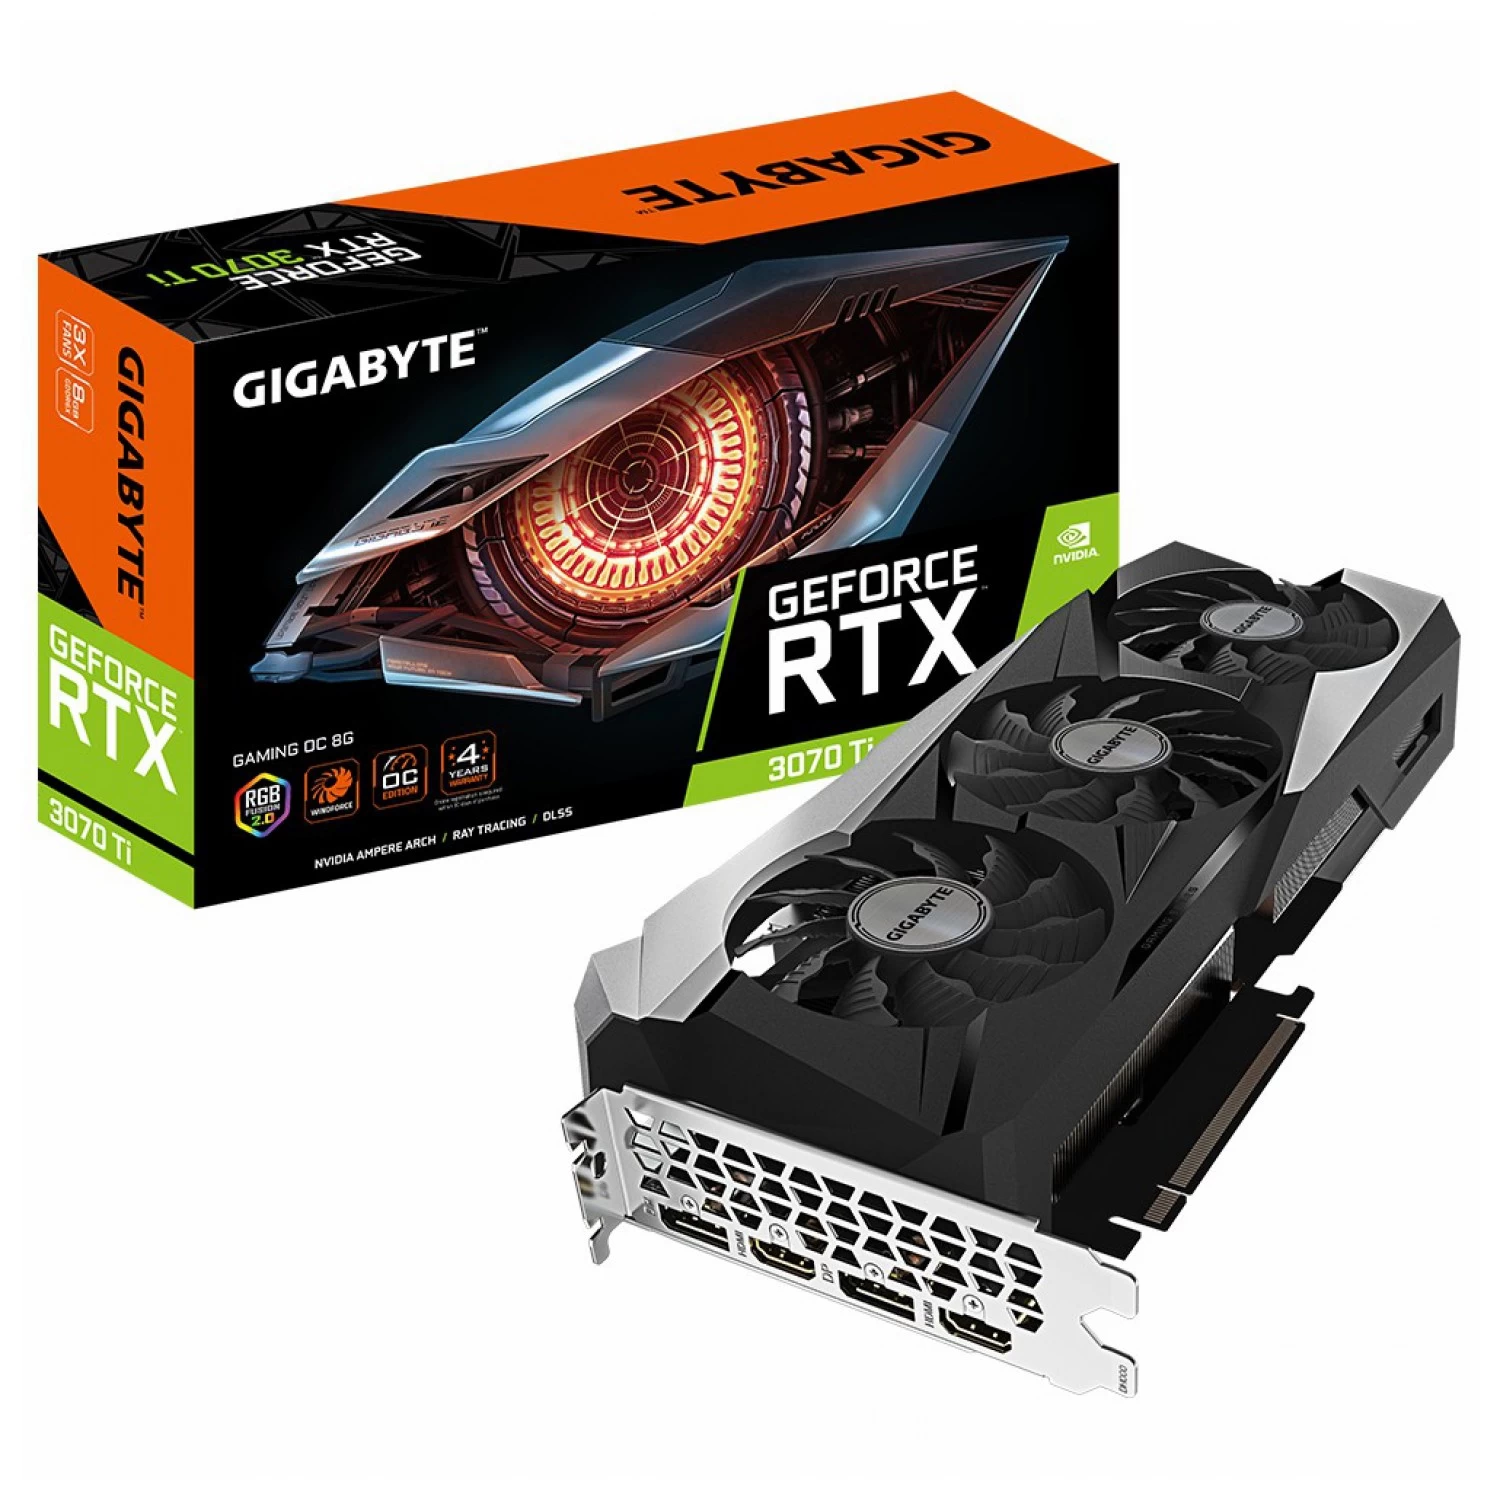 Gigabyte GeForce RTX 3070 Ti GAMING OC 8G Package